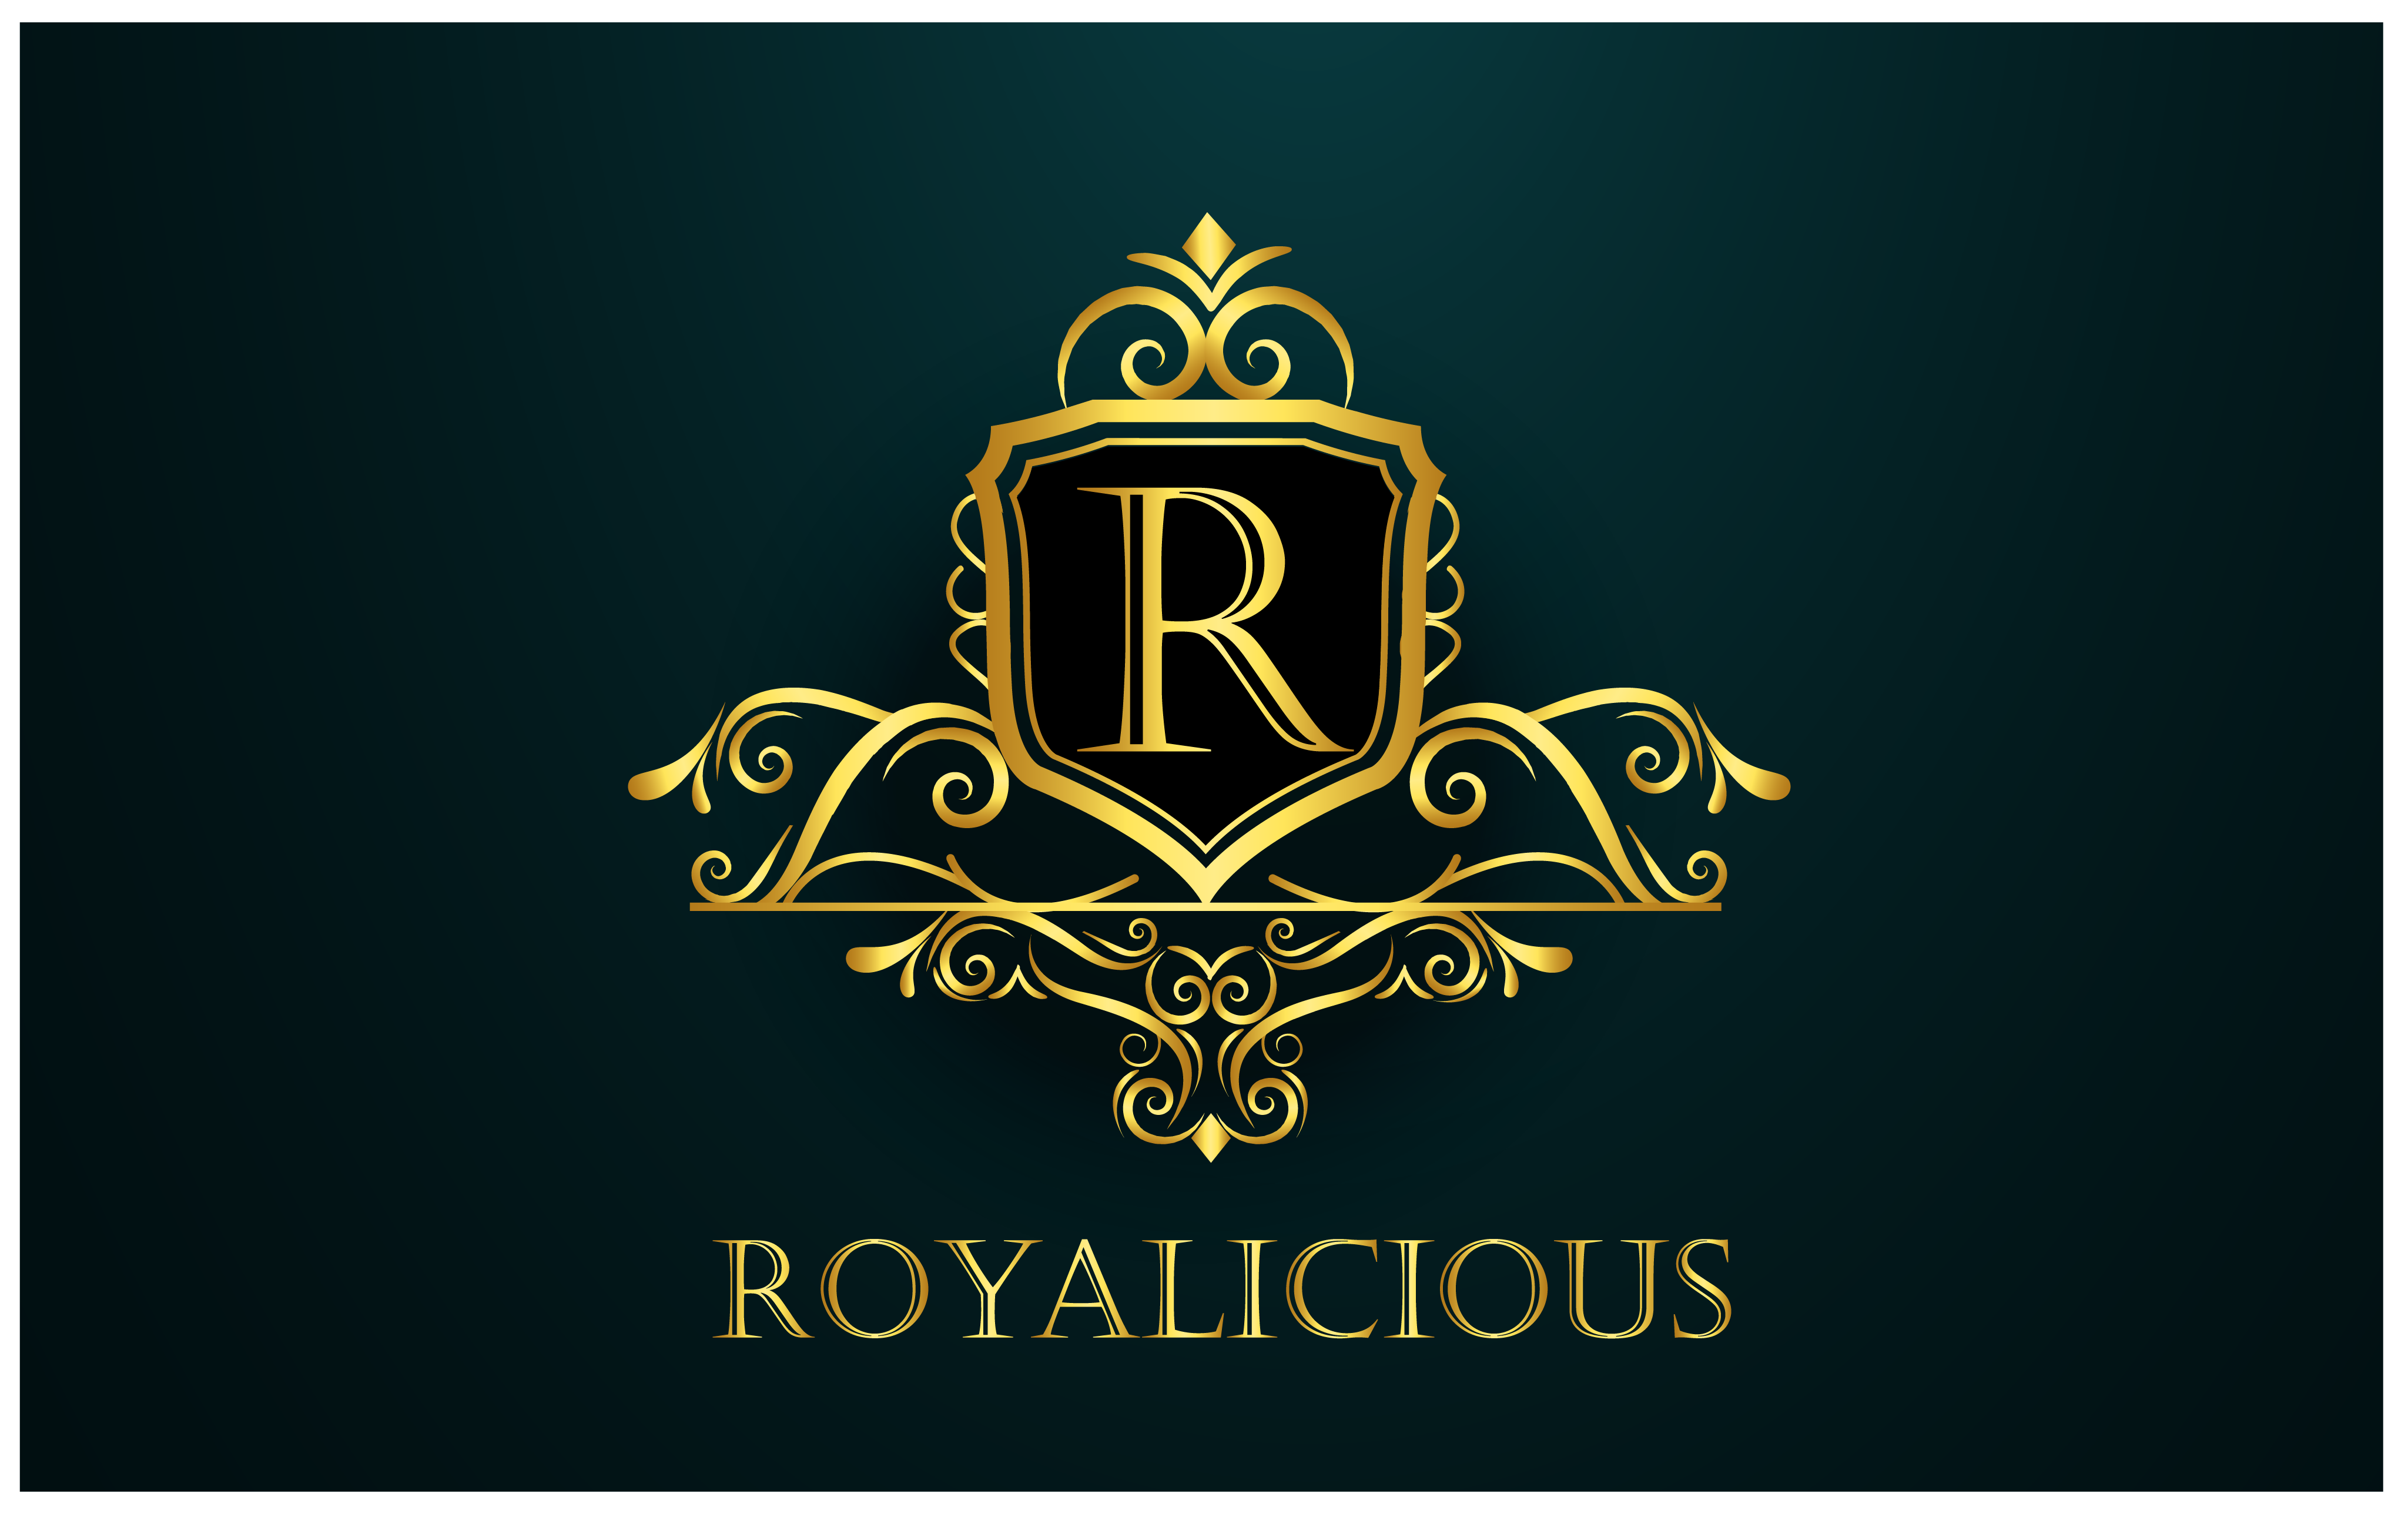 Royalicious Logo by Abdul Ahad on Dribbble